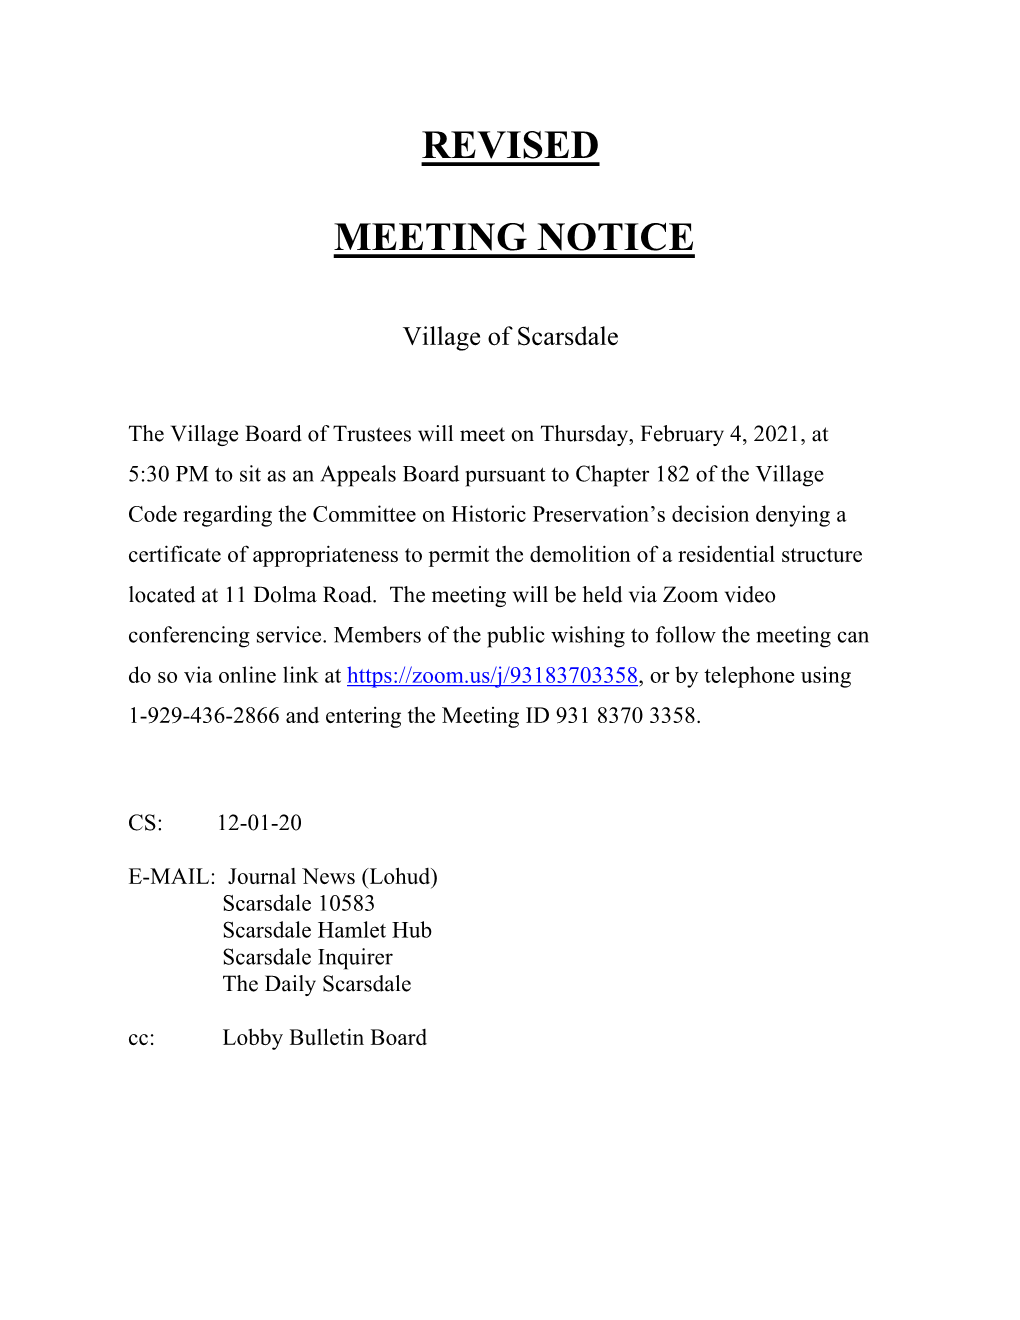 Revised Meeting Notice